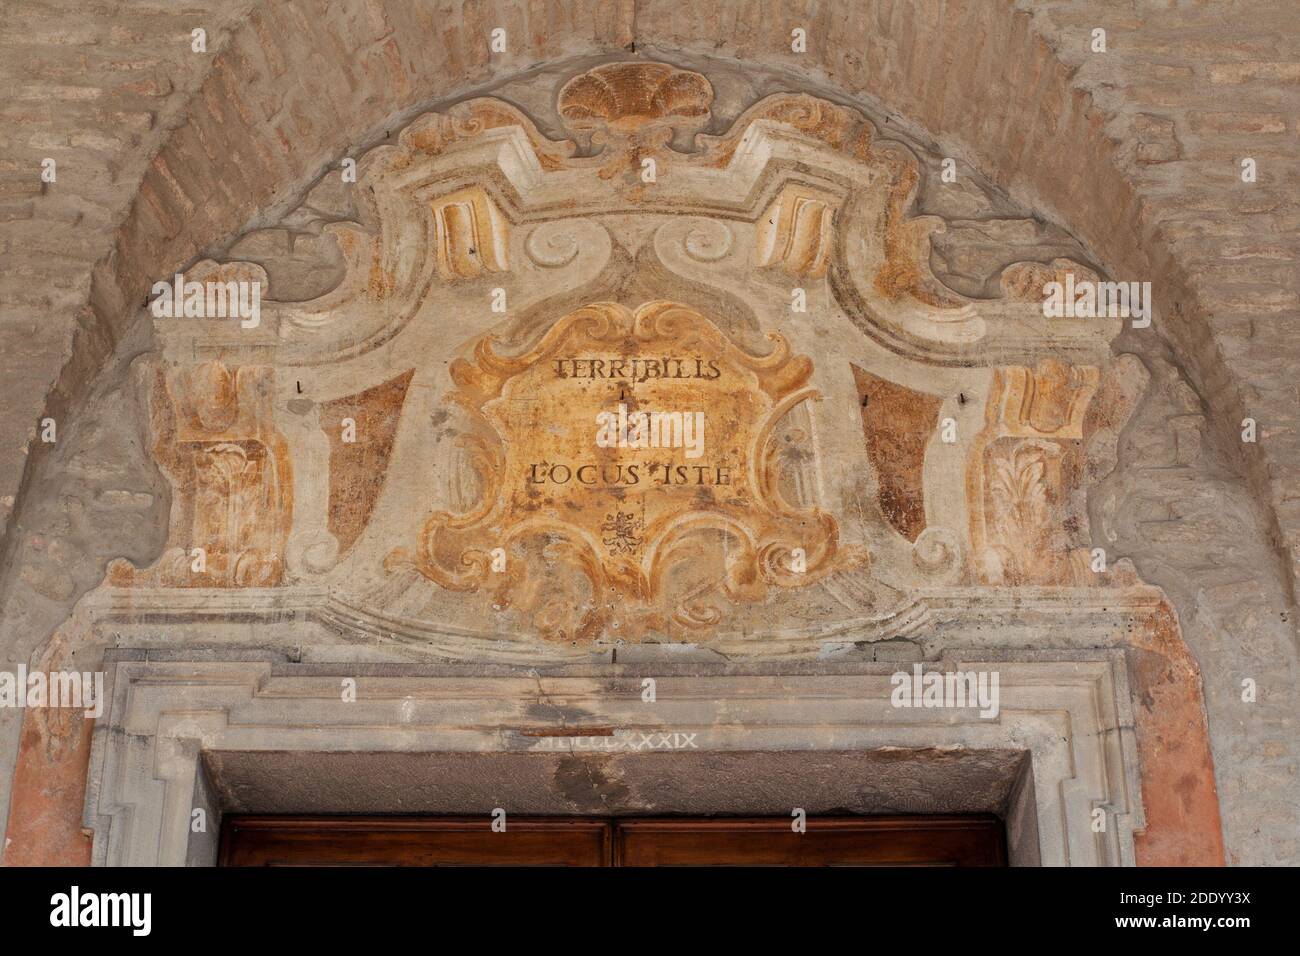 Terribilis est locus iste (What an awe-inspiring place this is) - Saint Columban's Abbey - Bobbio, Emilia Romagna, Italy Stock Photo